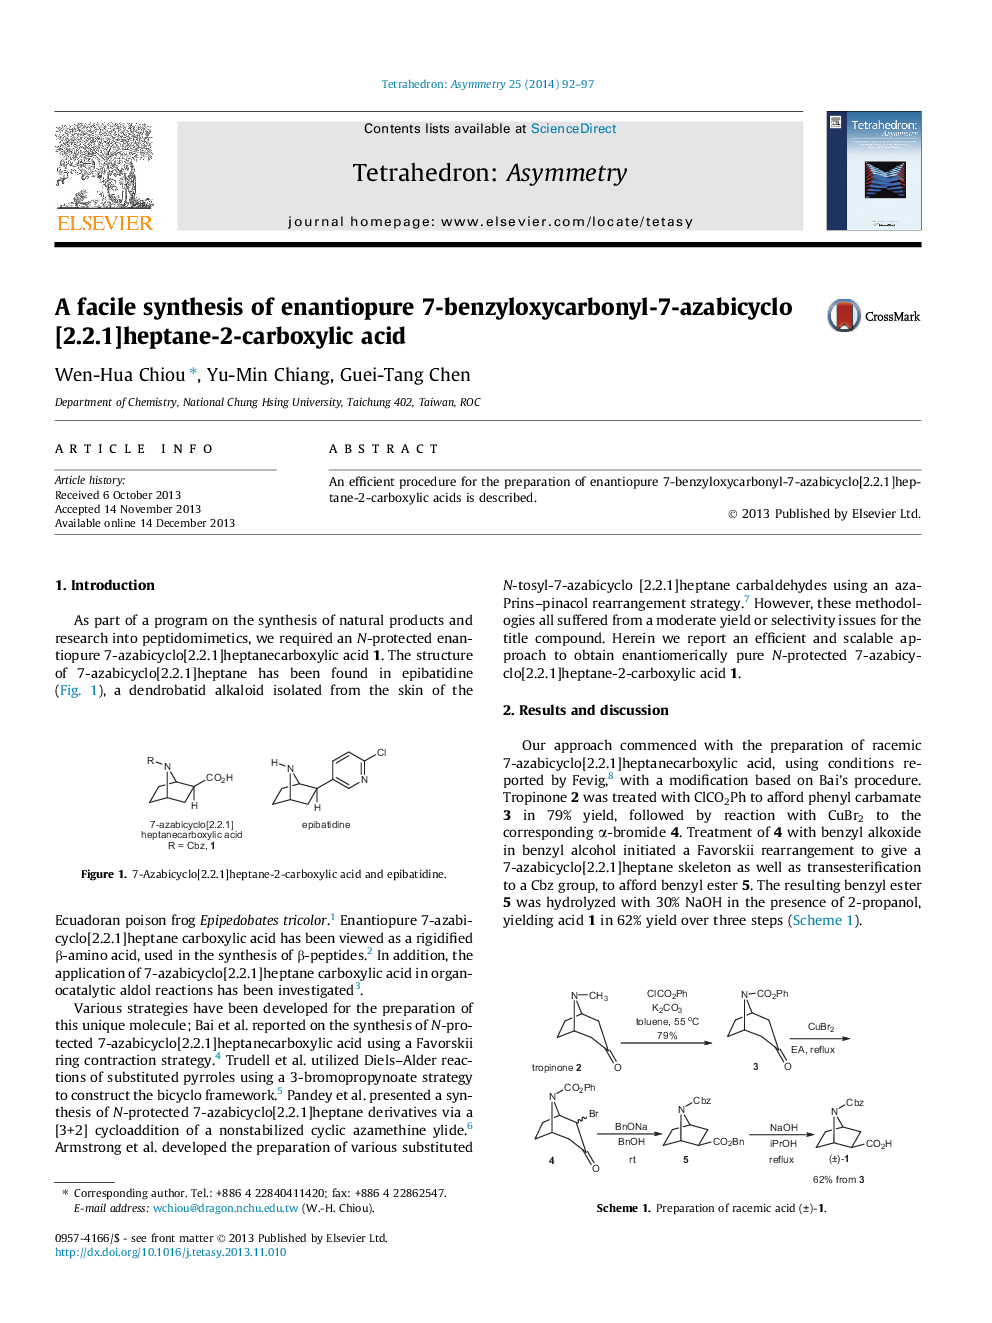 A facile synthesis of enantiopure 7-benzyloxycarbonyl-7-azabicyclo[2.2.1]heptane-2-carboxylic acid